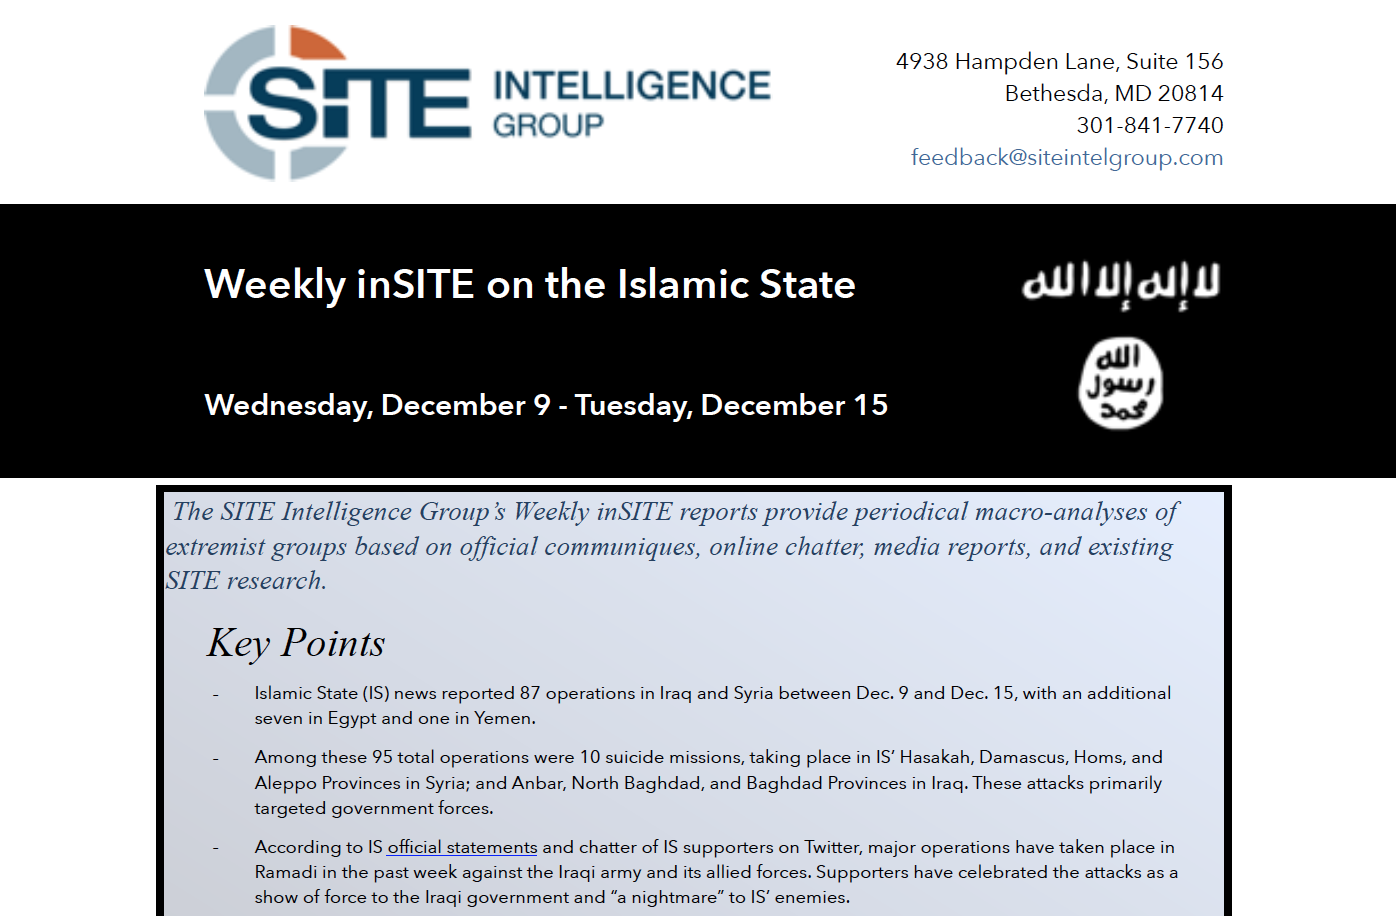 Weekly inSITE on ISIS, Dec 9 - Dec 15